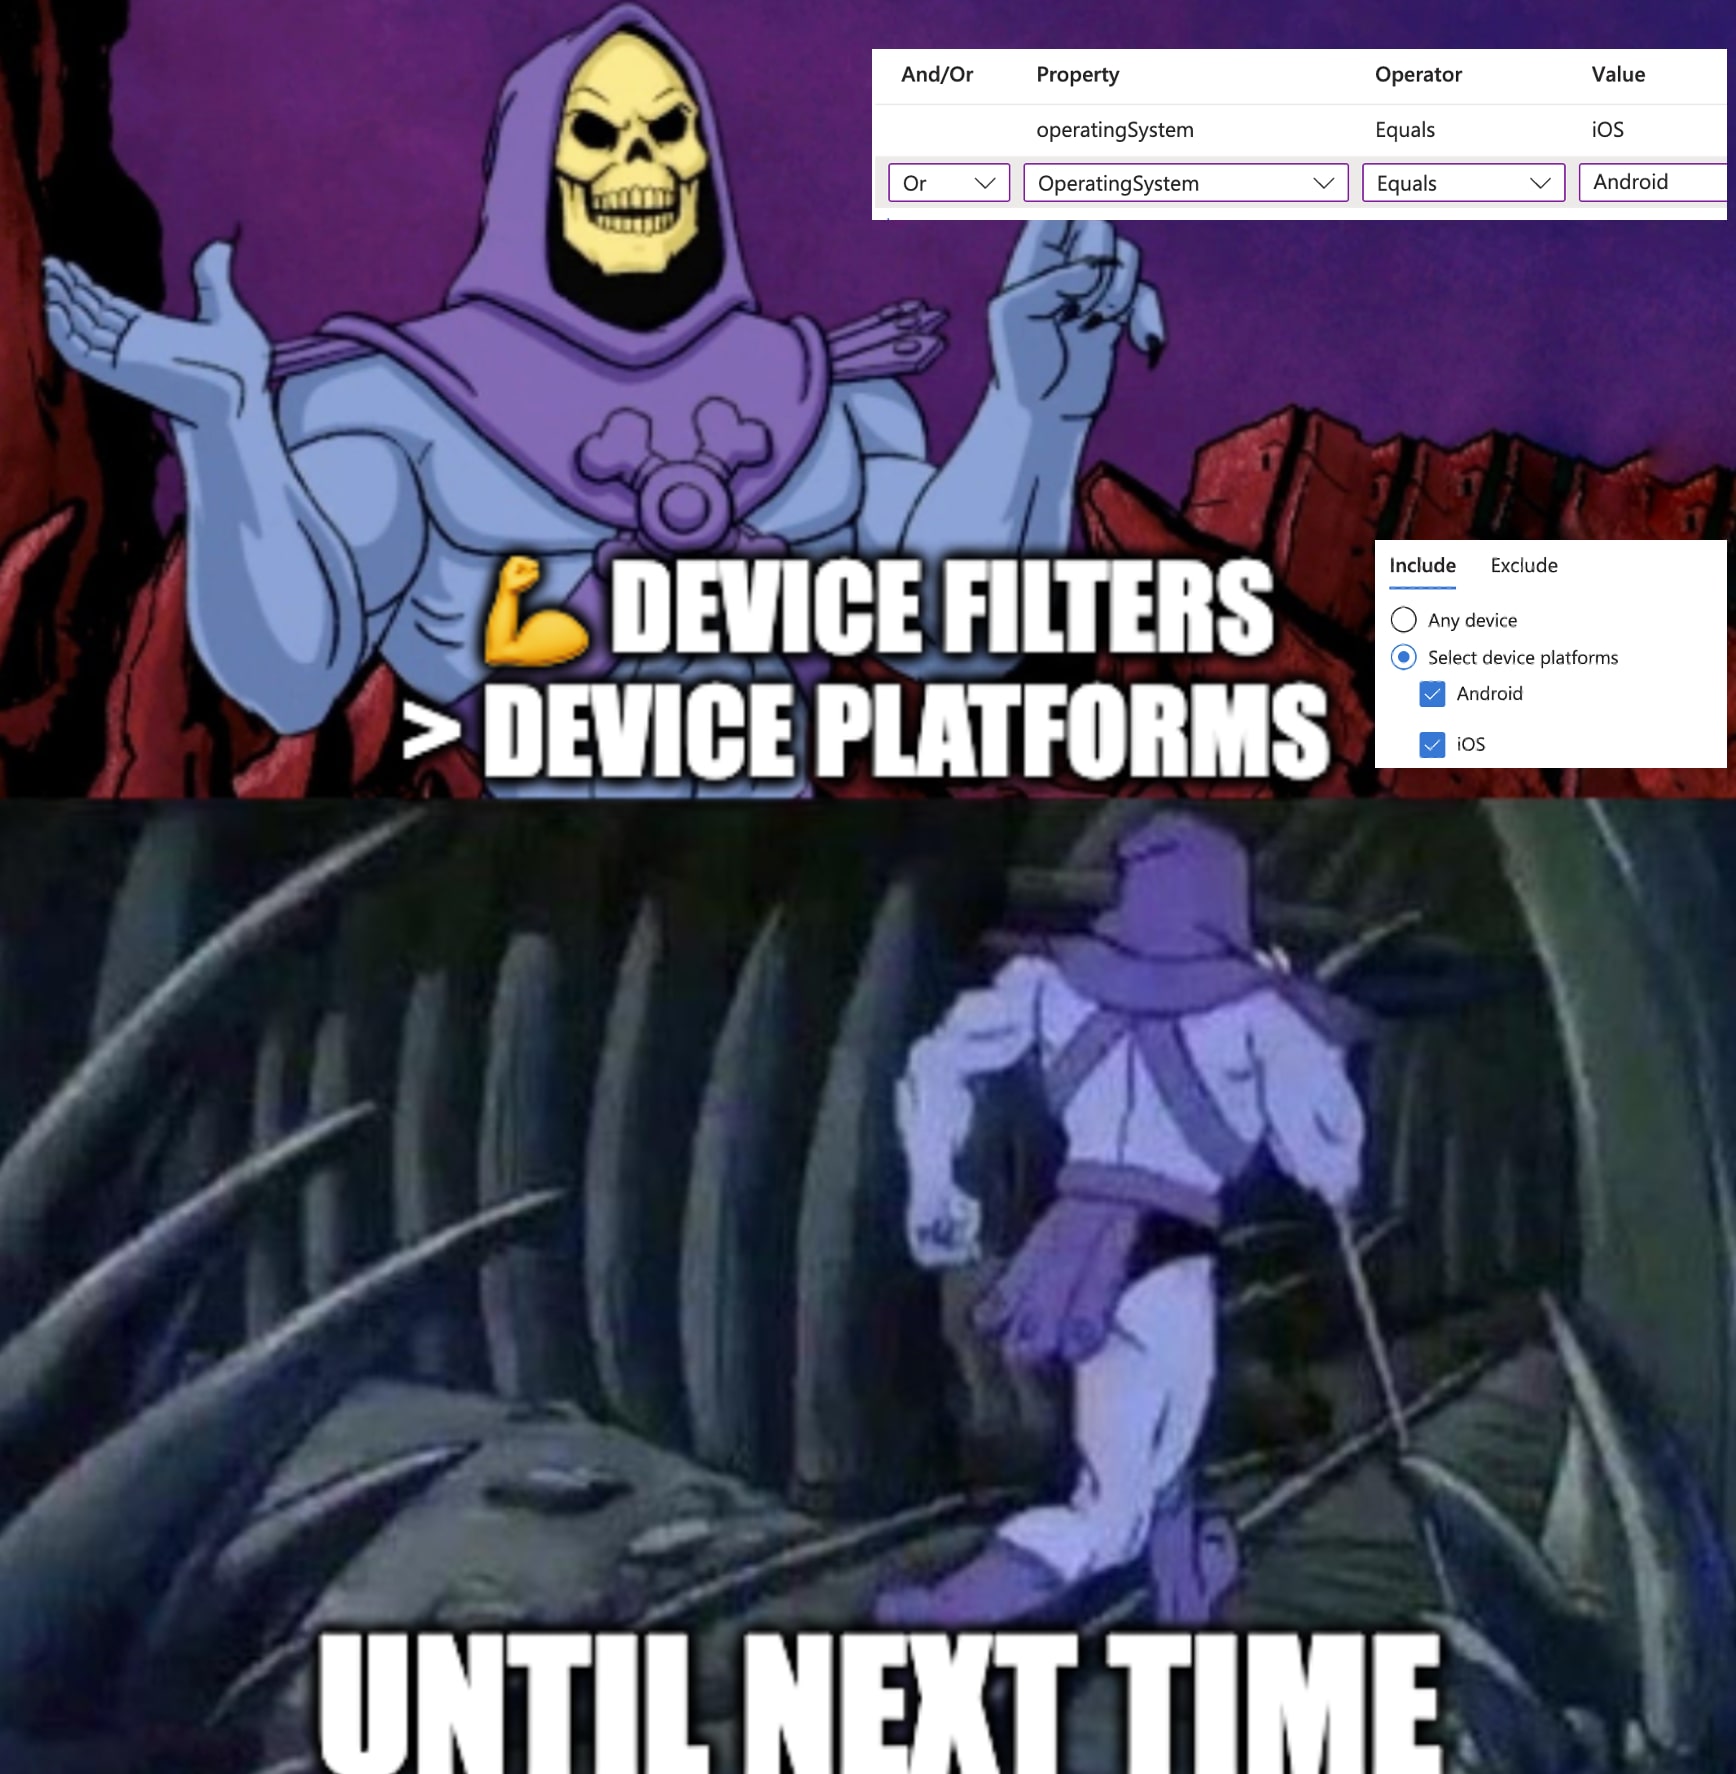 He man skeleton recommends using device filter over device platform